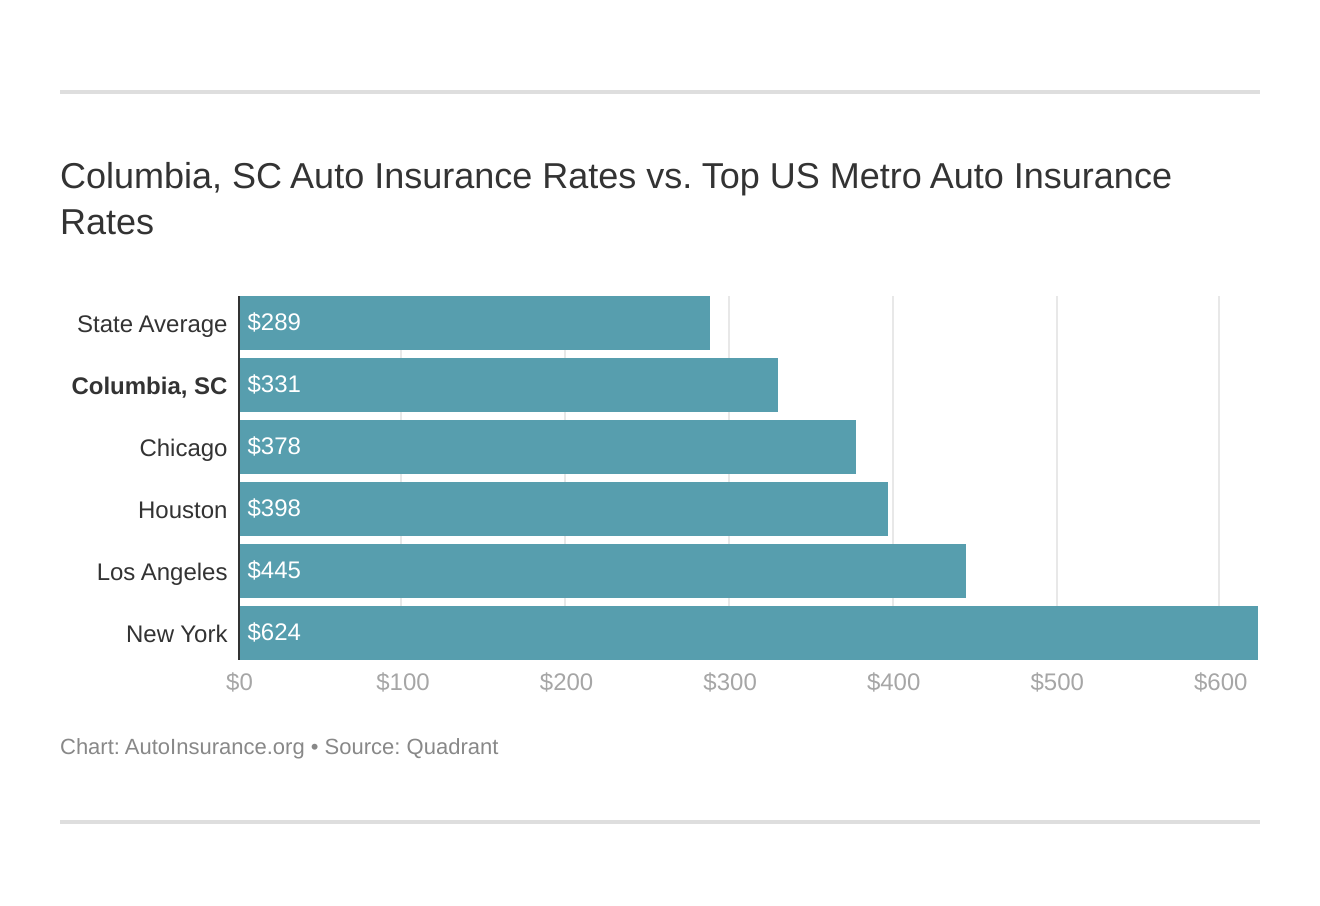 Columbia, SC Auto Insurance Rates vs. Top US Metro Auto Insurance Rates